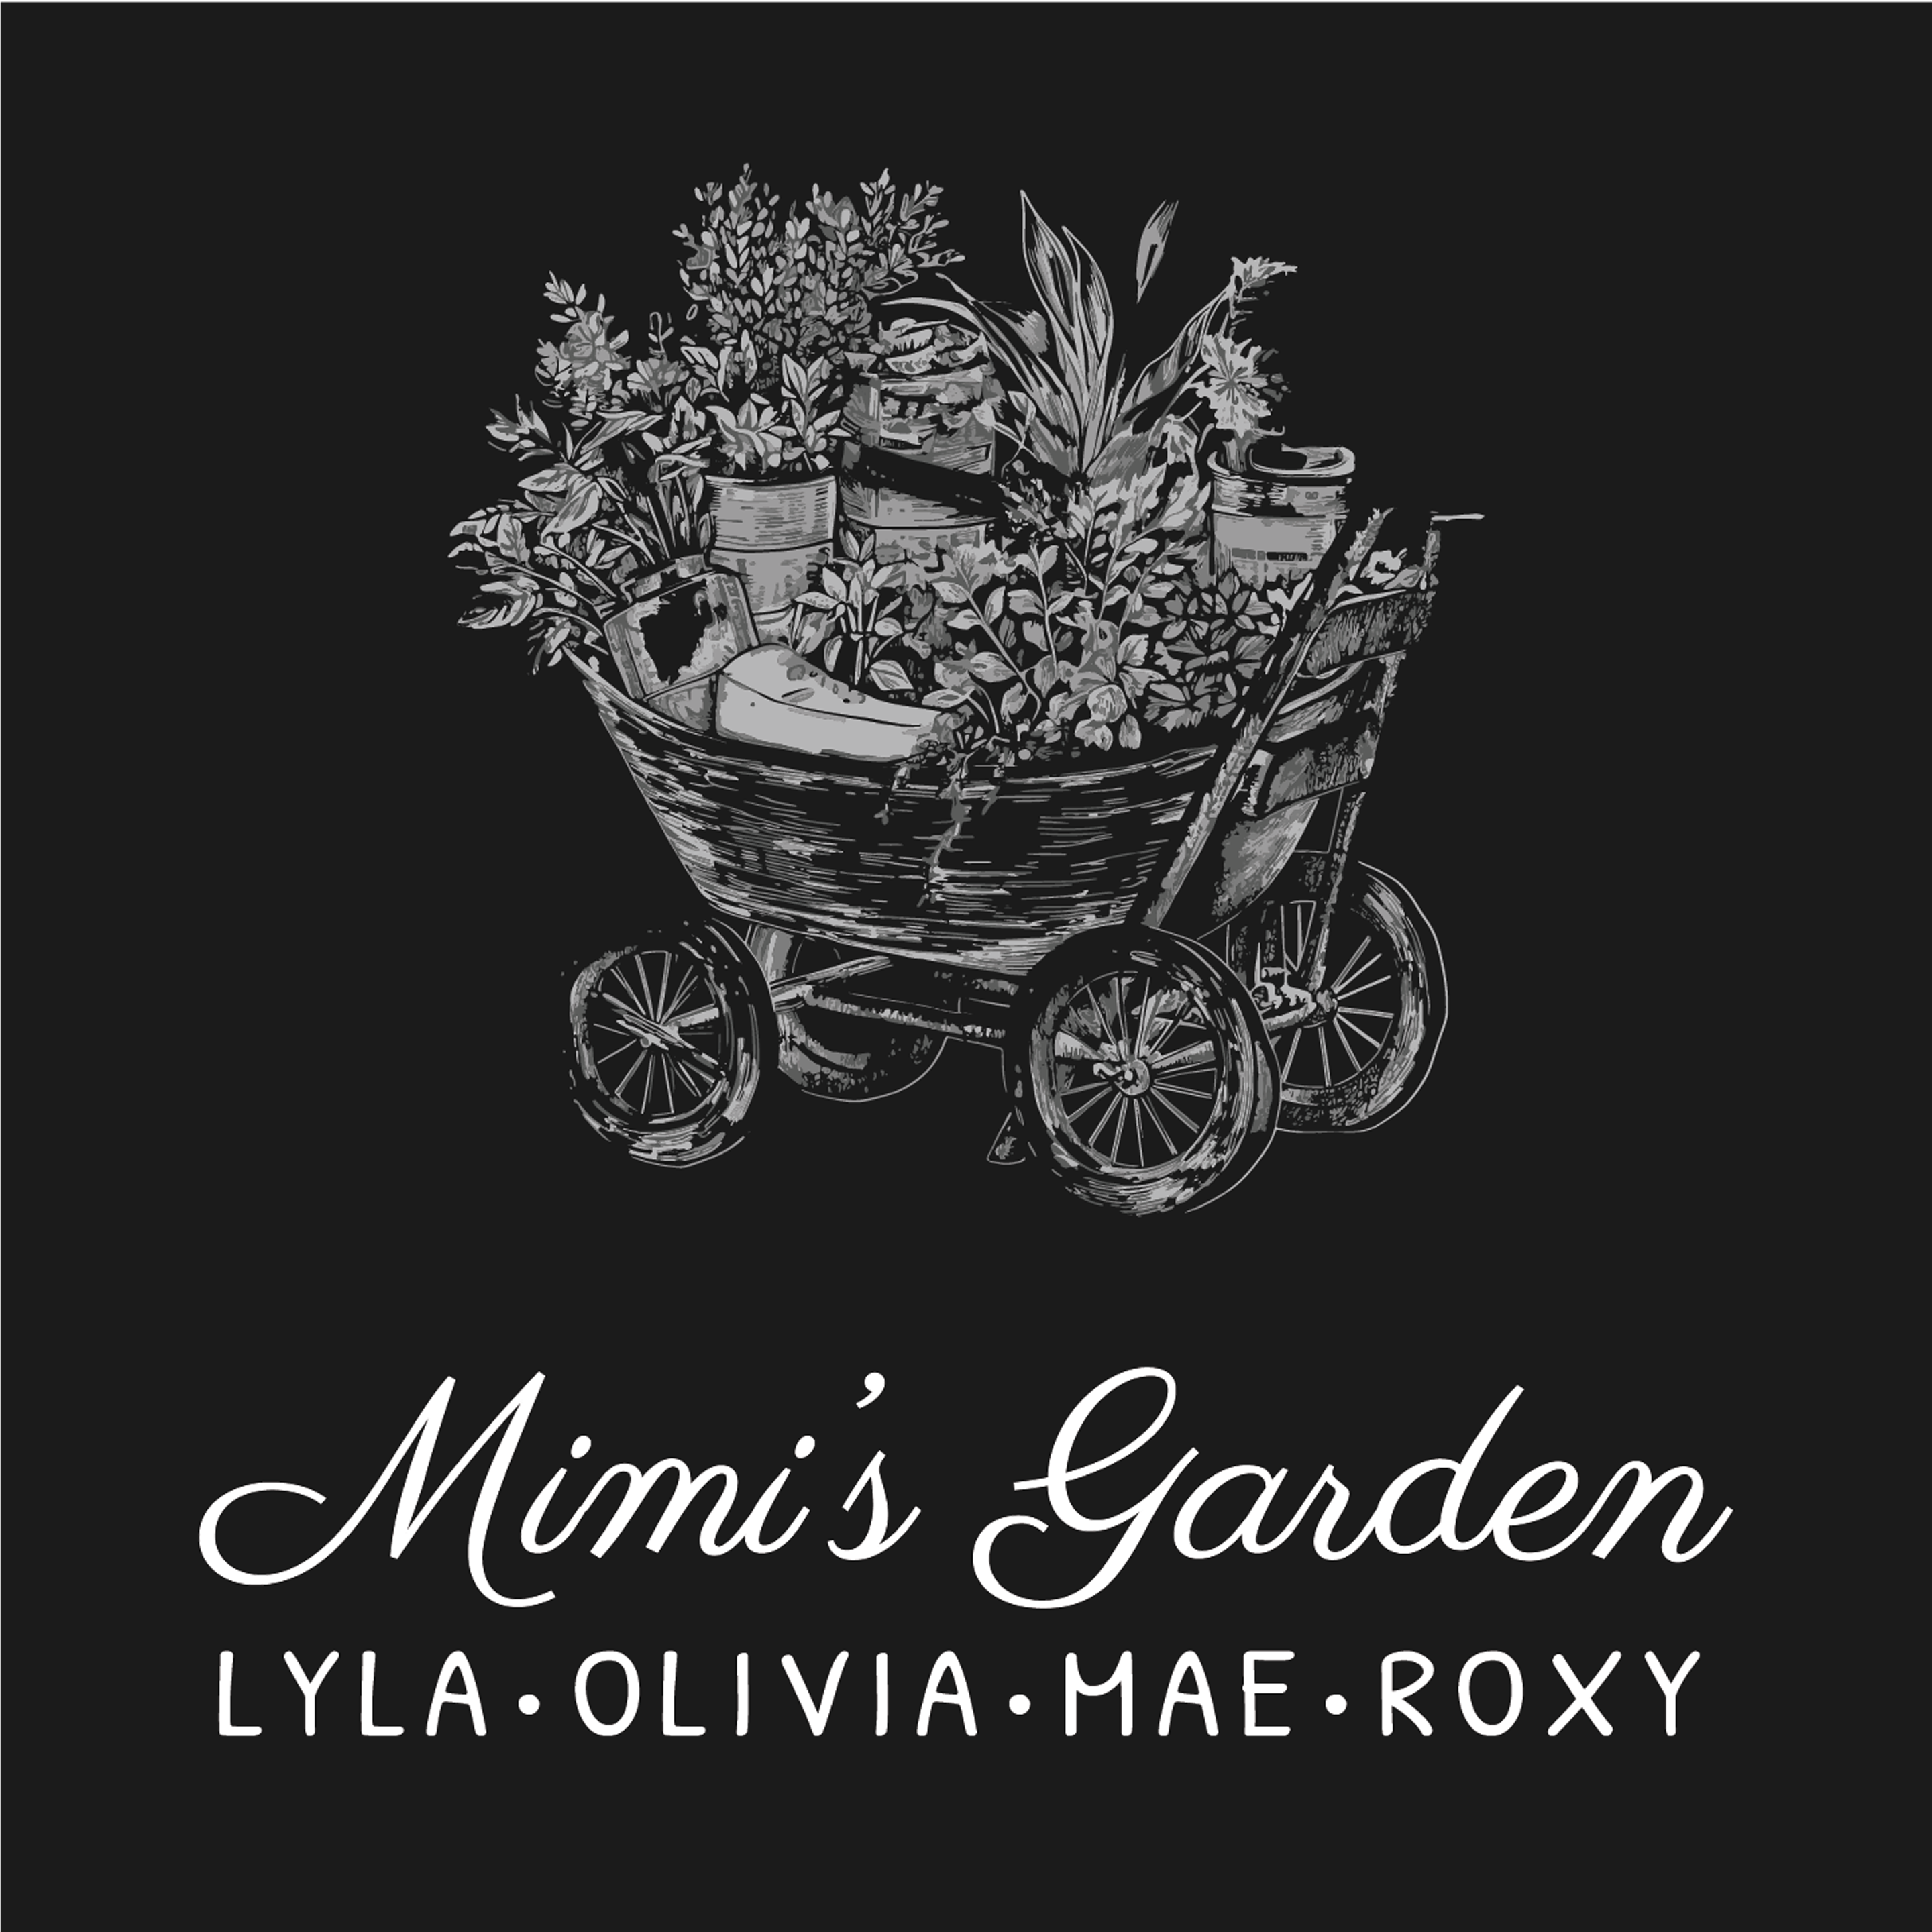 Mimi's Garden